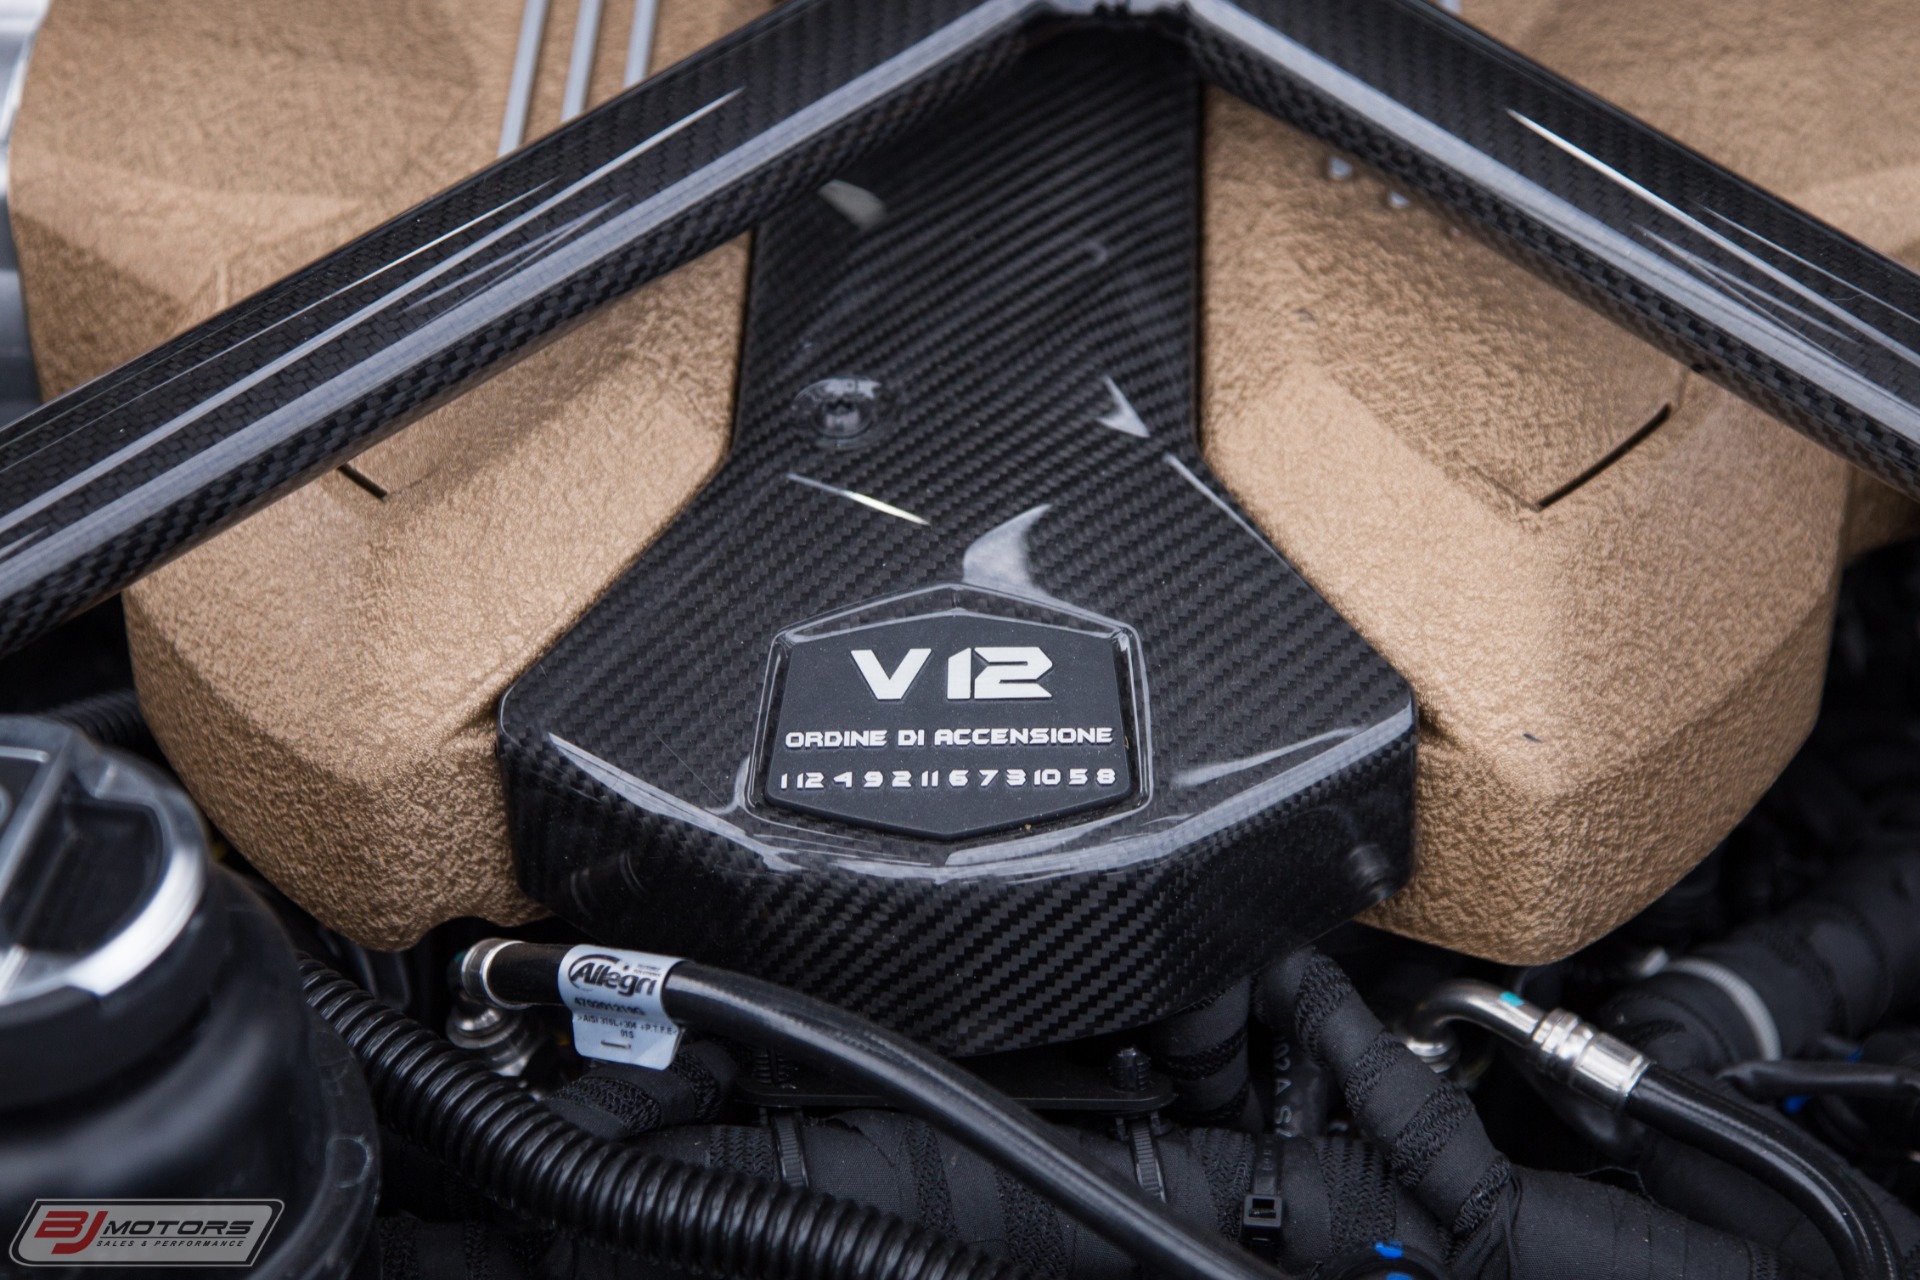 New-2019-Lamborghini-Aventador-SVJ-LP770-4-Delivery-Miles-Available-Now-No-Wait